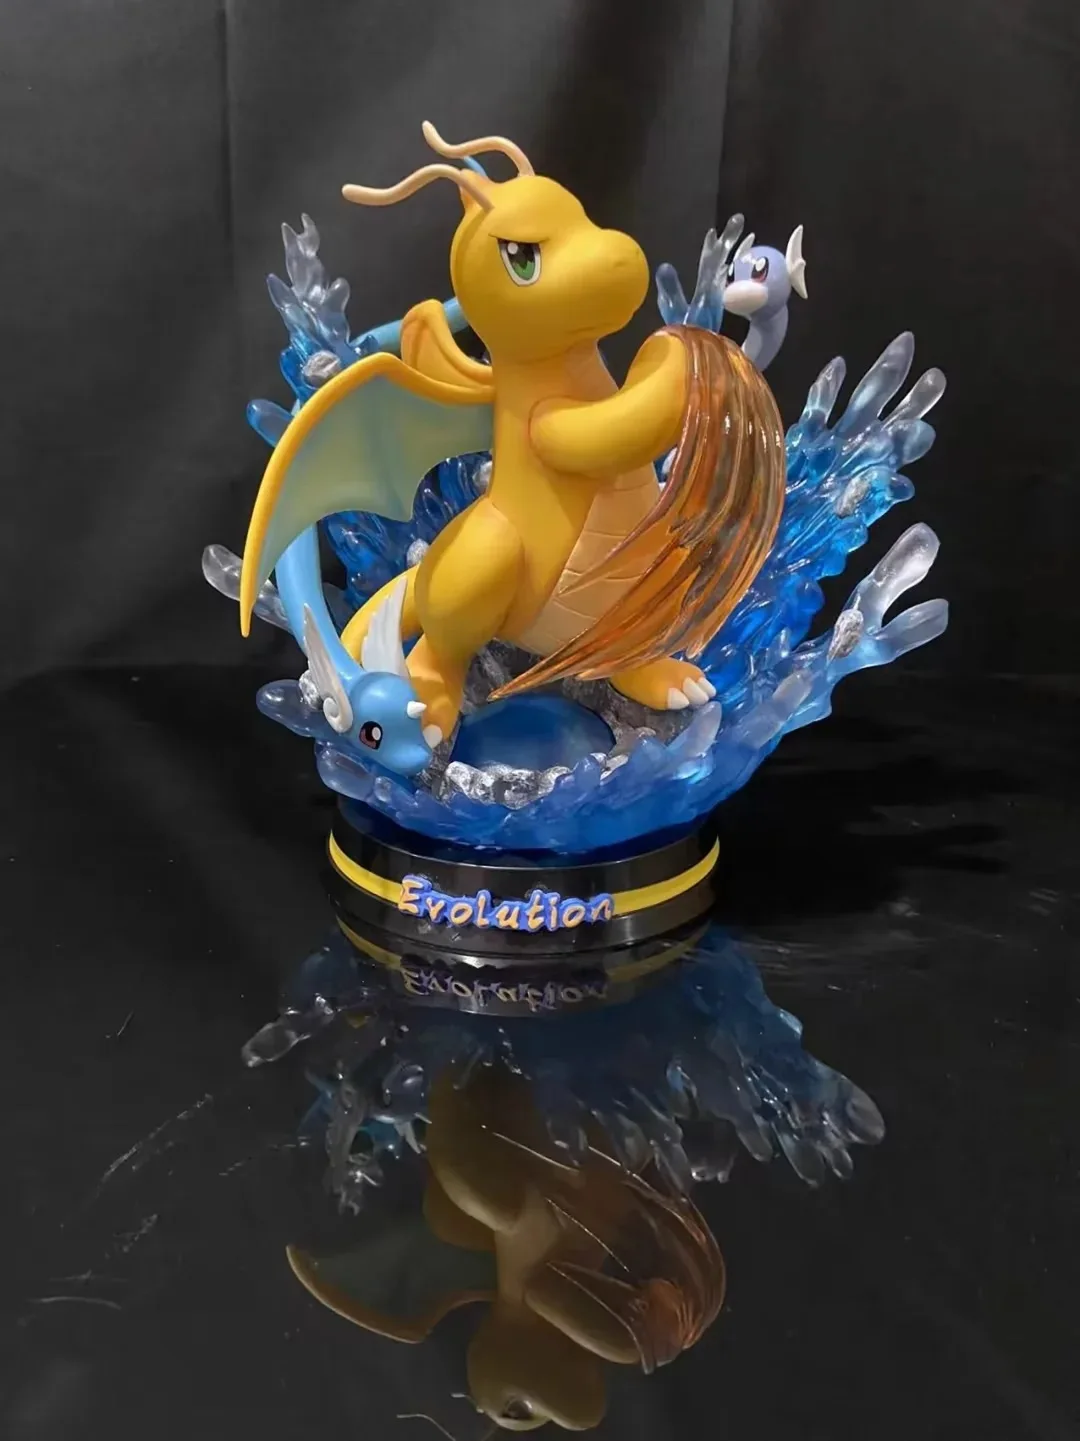 

Anime Pokemon Dragonite Dragonair Draco Dragonir Evolution Ver. GK PVC Action Figure Game Statue Collectible Model Toys Doll